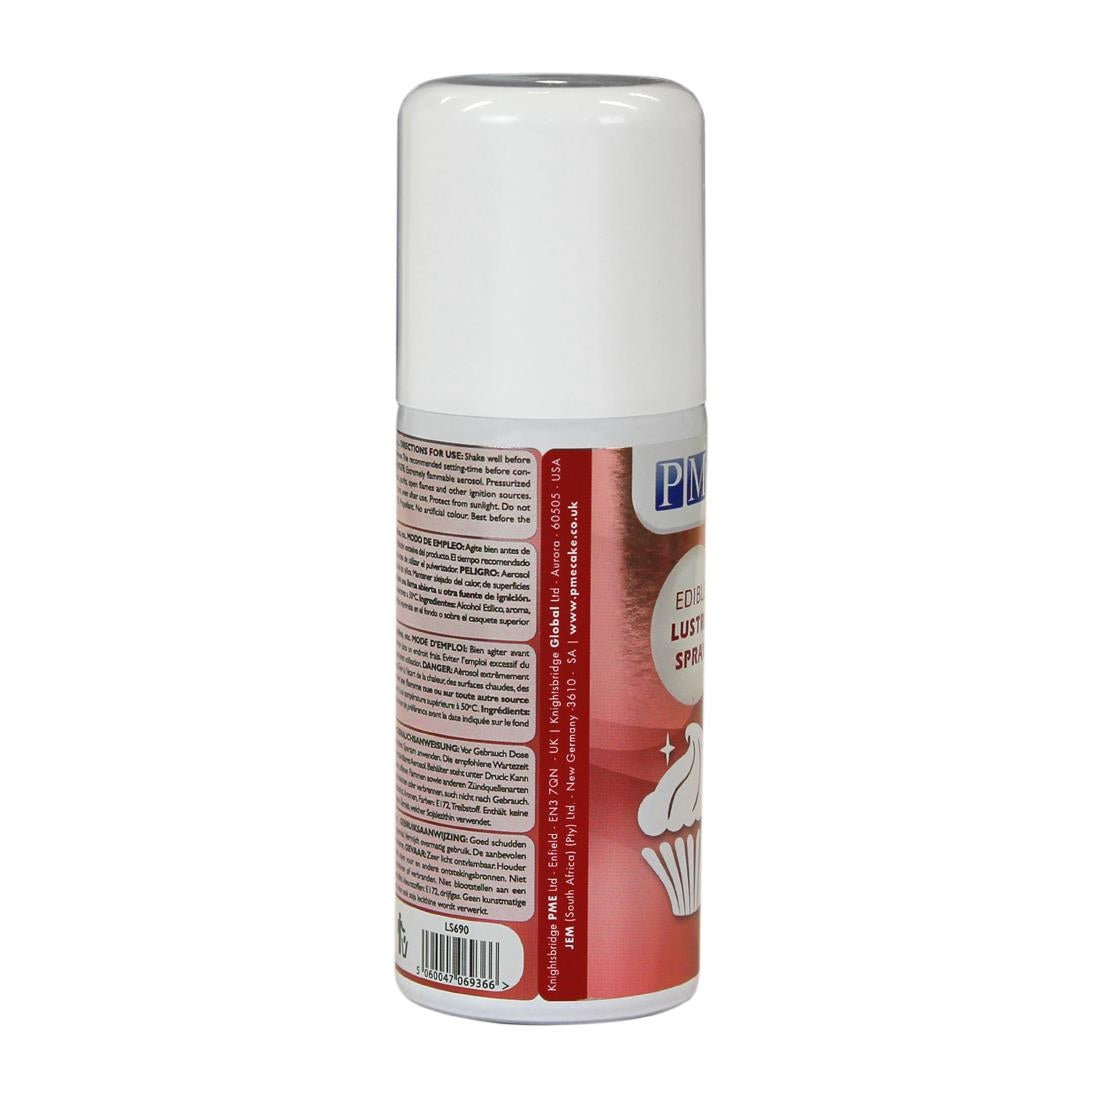 HU200 PME Edible Lustre Spray 100ml - Red